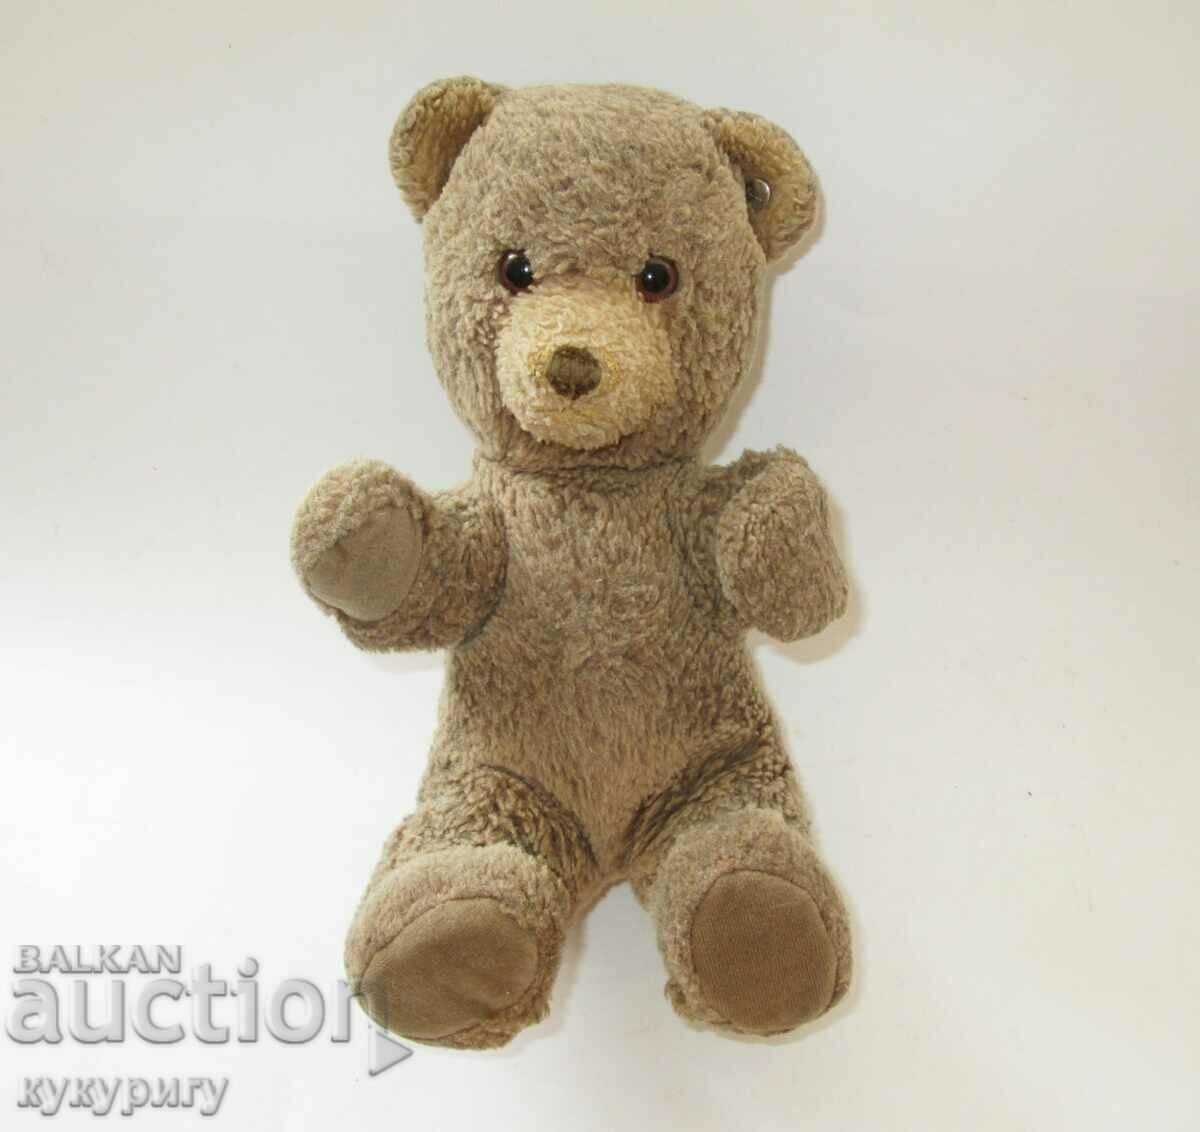 Old children's teddy bear teddy bear STEIFF Germany